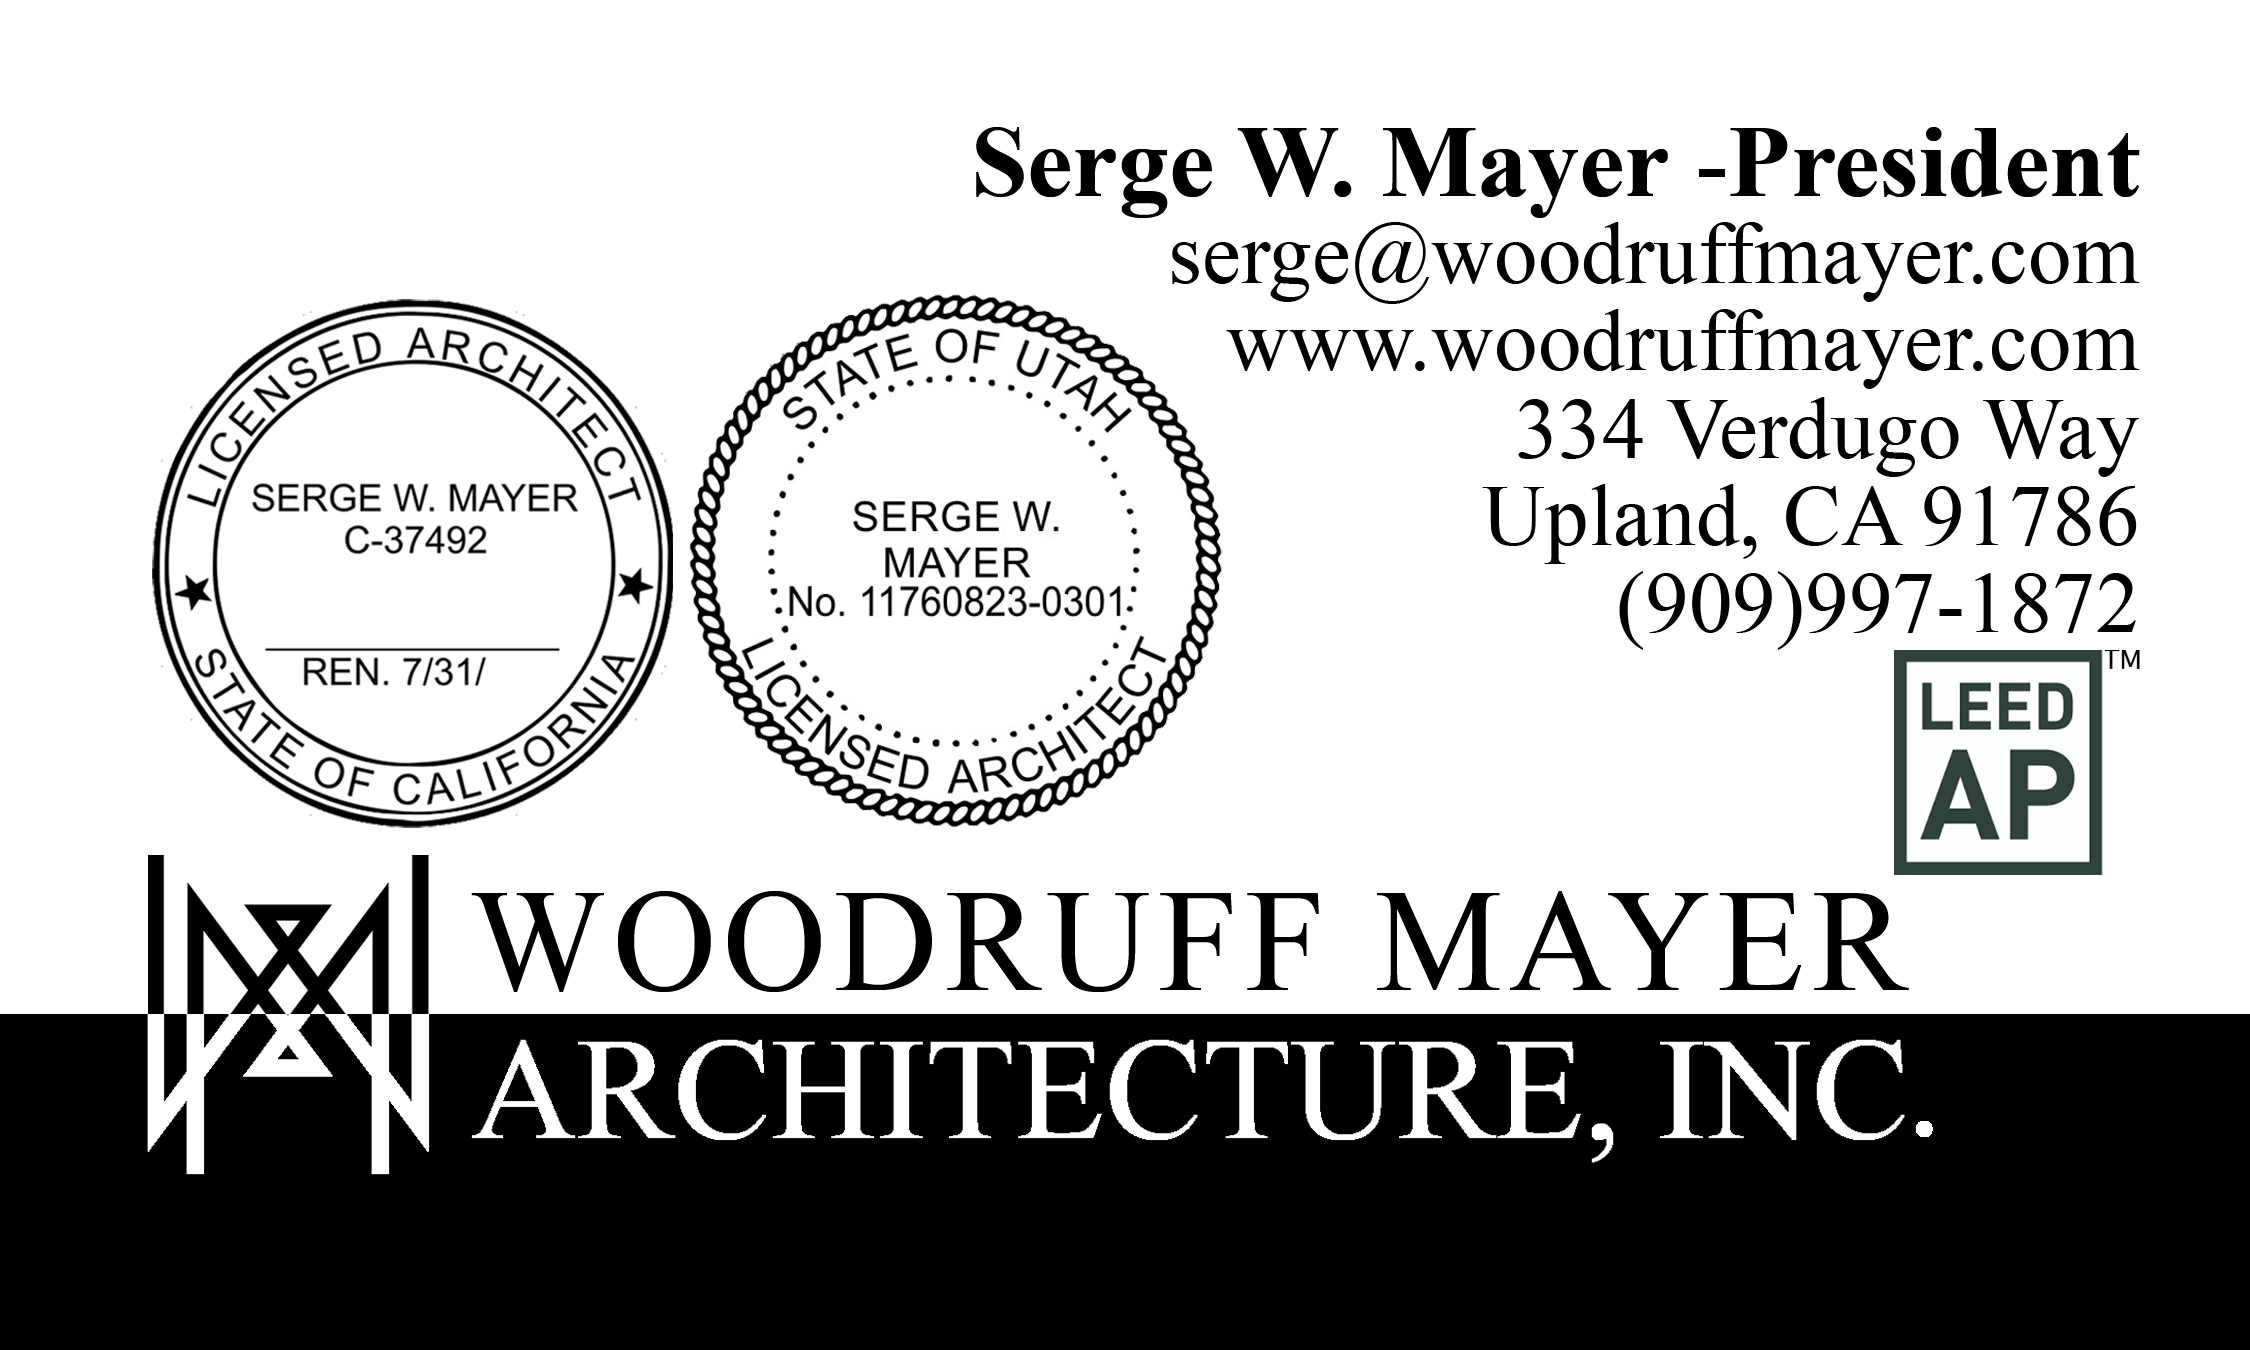 Woodruff Mayer Architecture, Inc. Logo